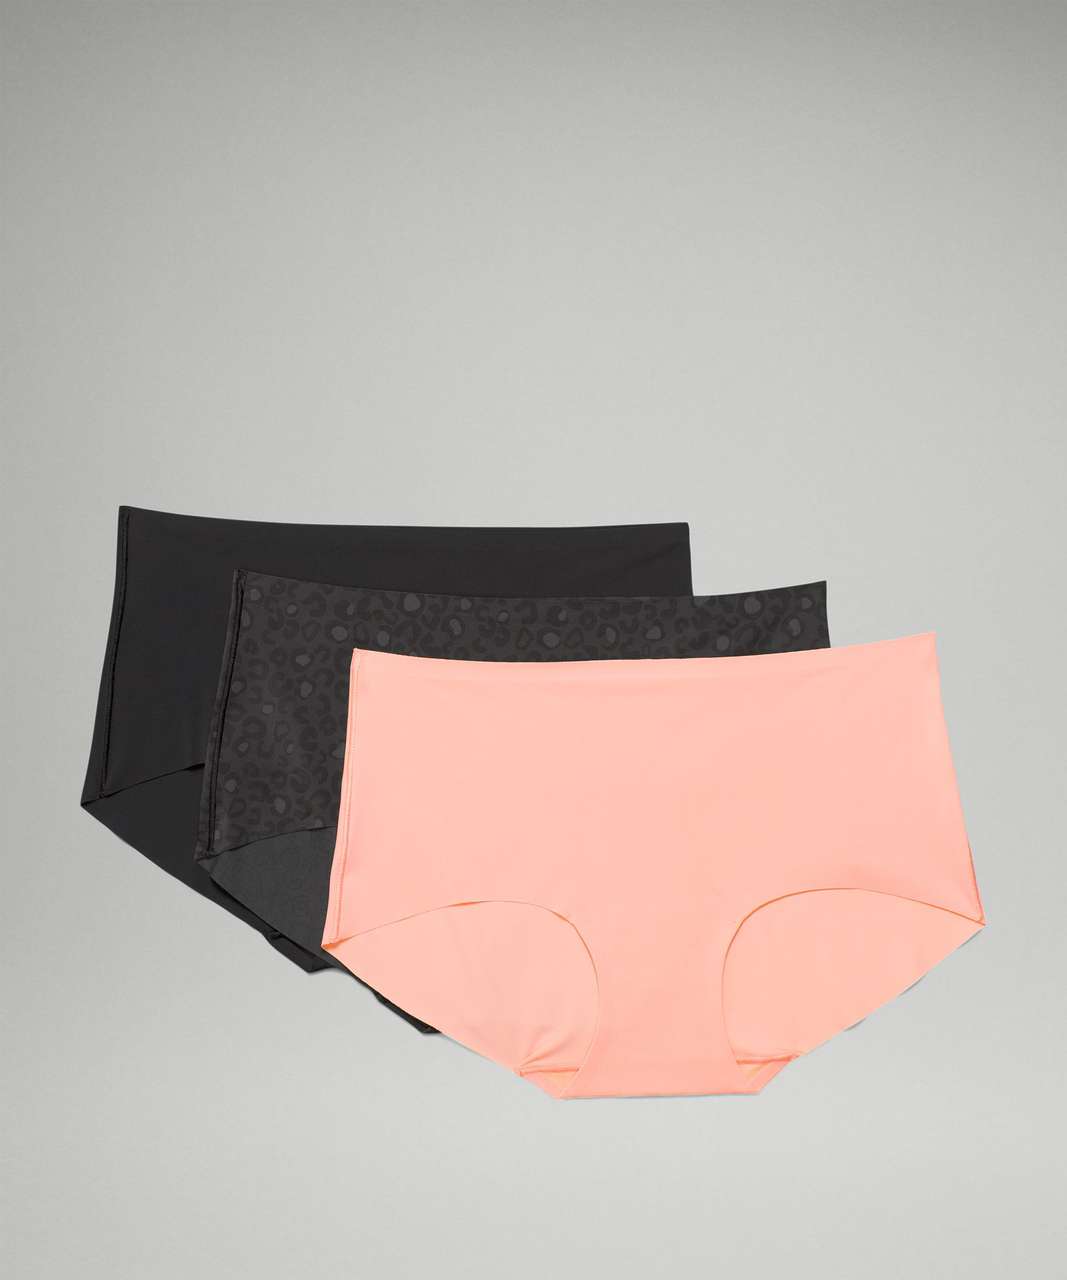 Lululemon InvisiWear Mid-Rise Boyshort Underwear 3 Pack - Black / Dew Pink / Intertwined Camo Deep Coal Multi